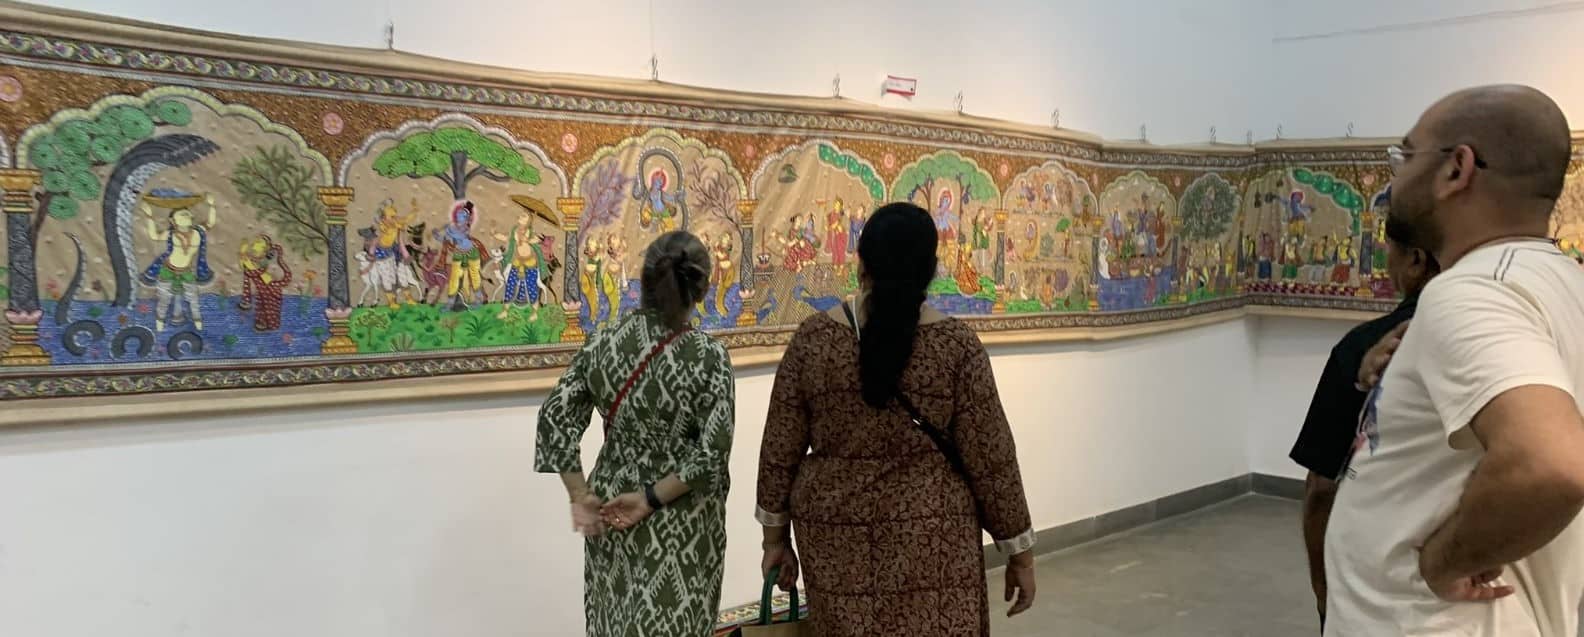 Longest Pattachitra Painting in the World International Indian Folk Art Gallery